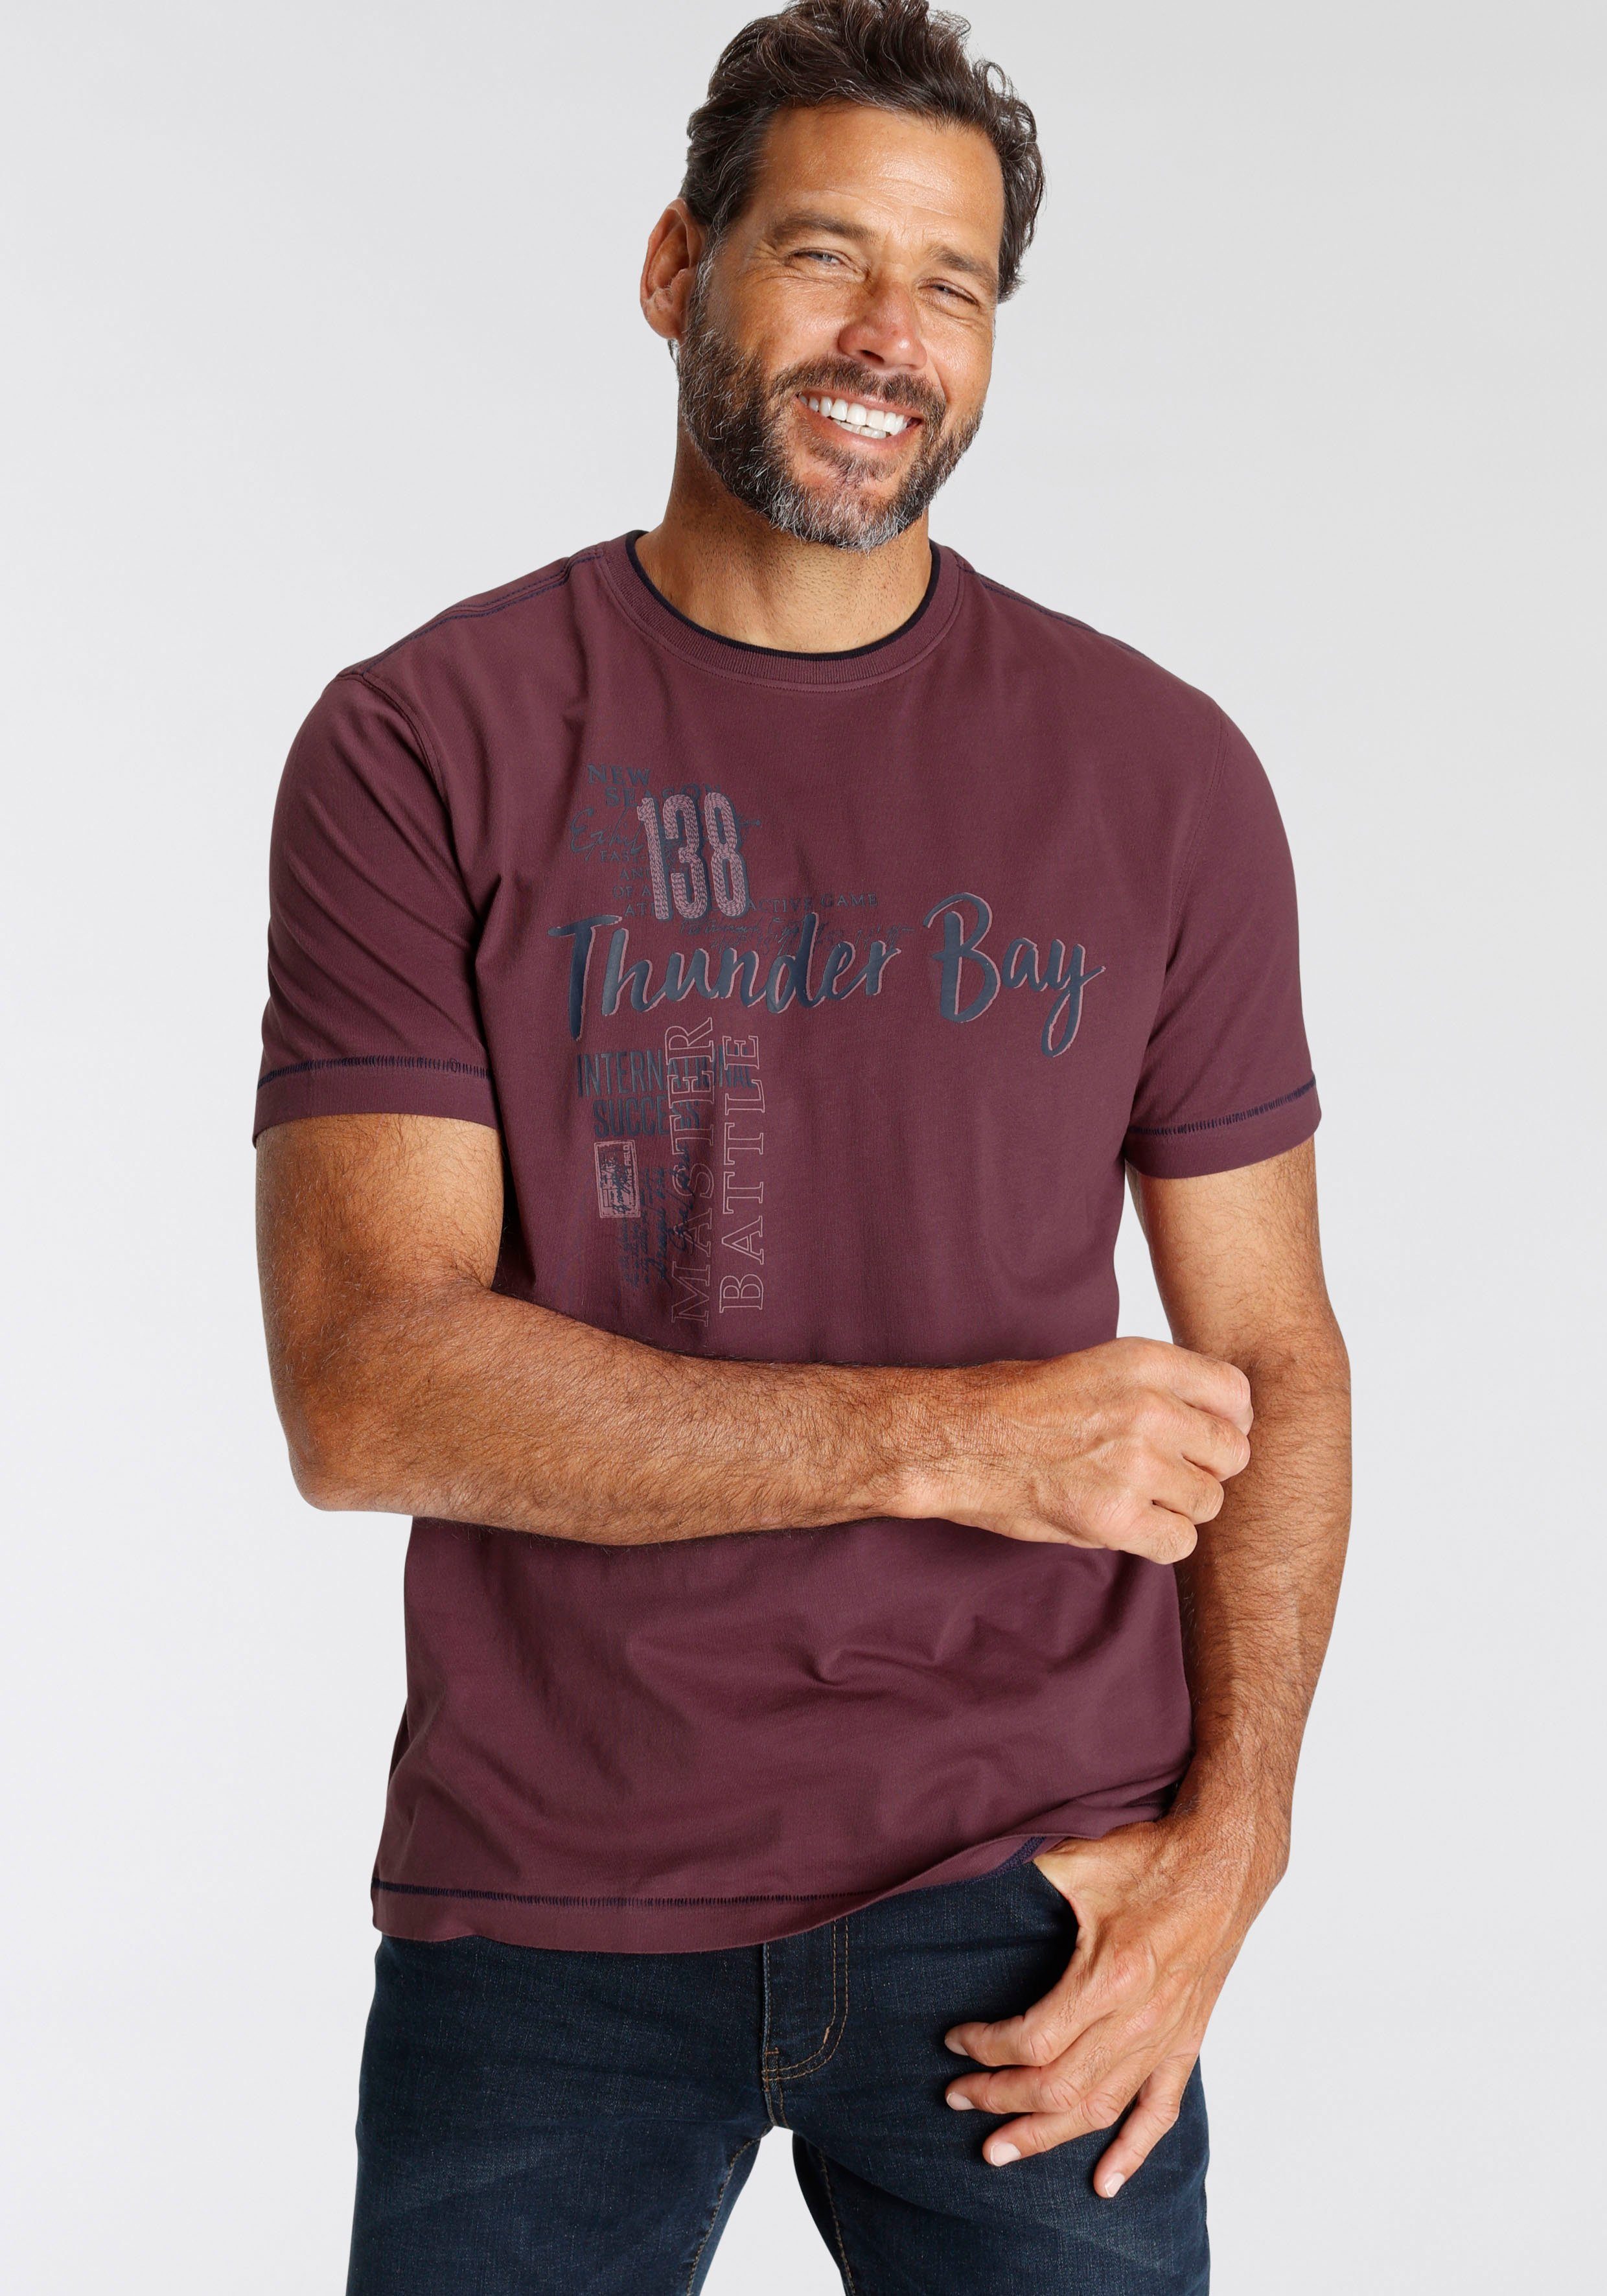 World Man's T-Shirt Brustprint mit